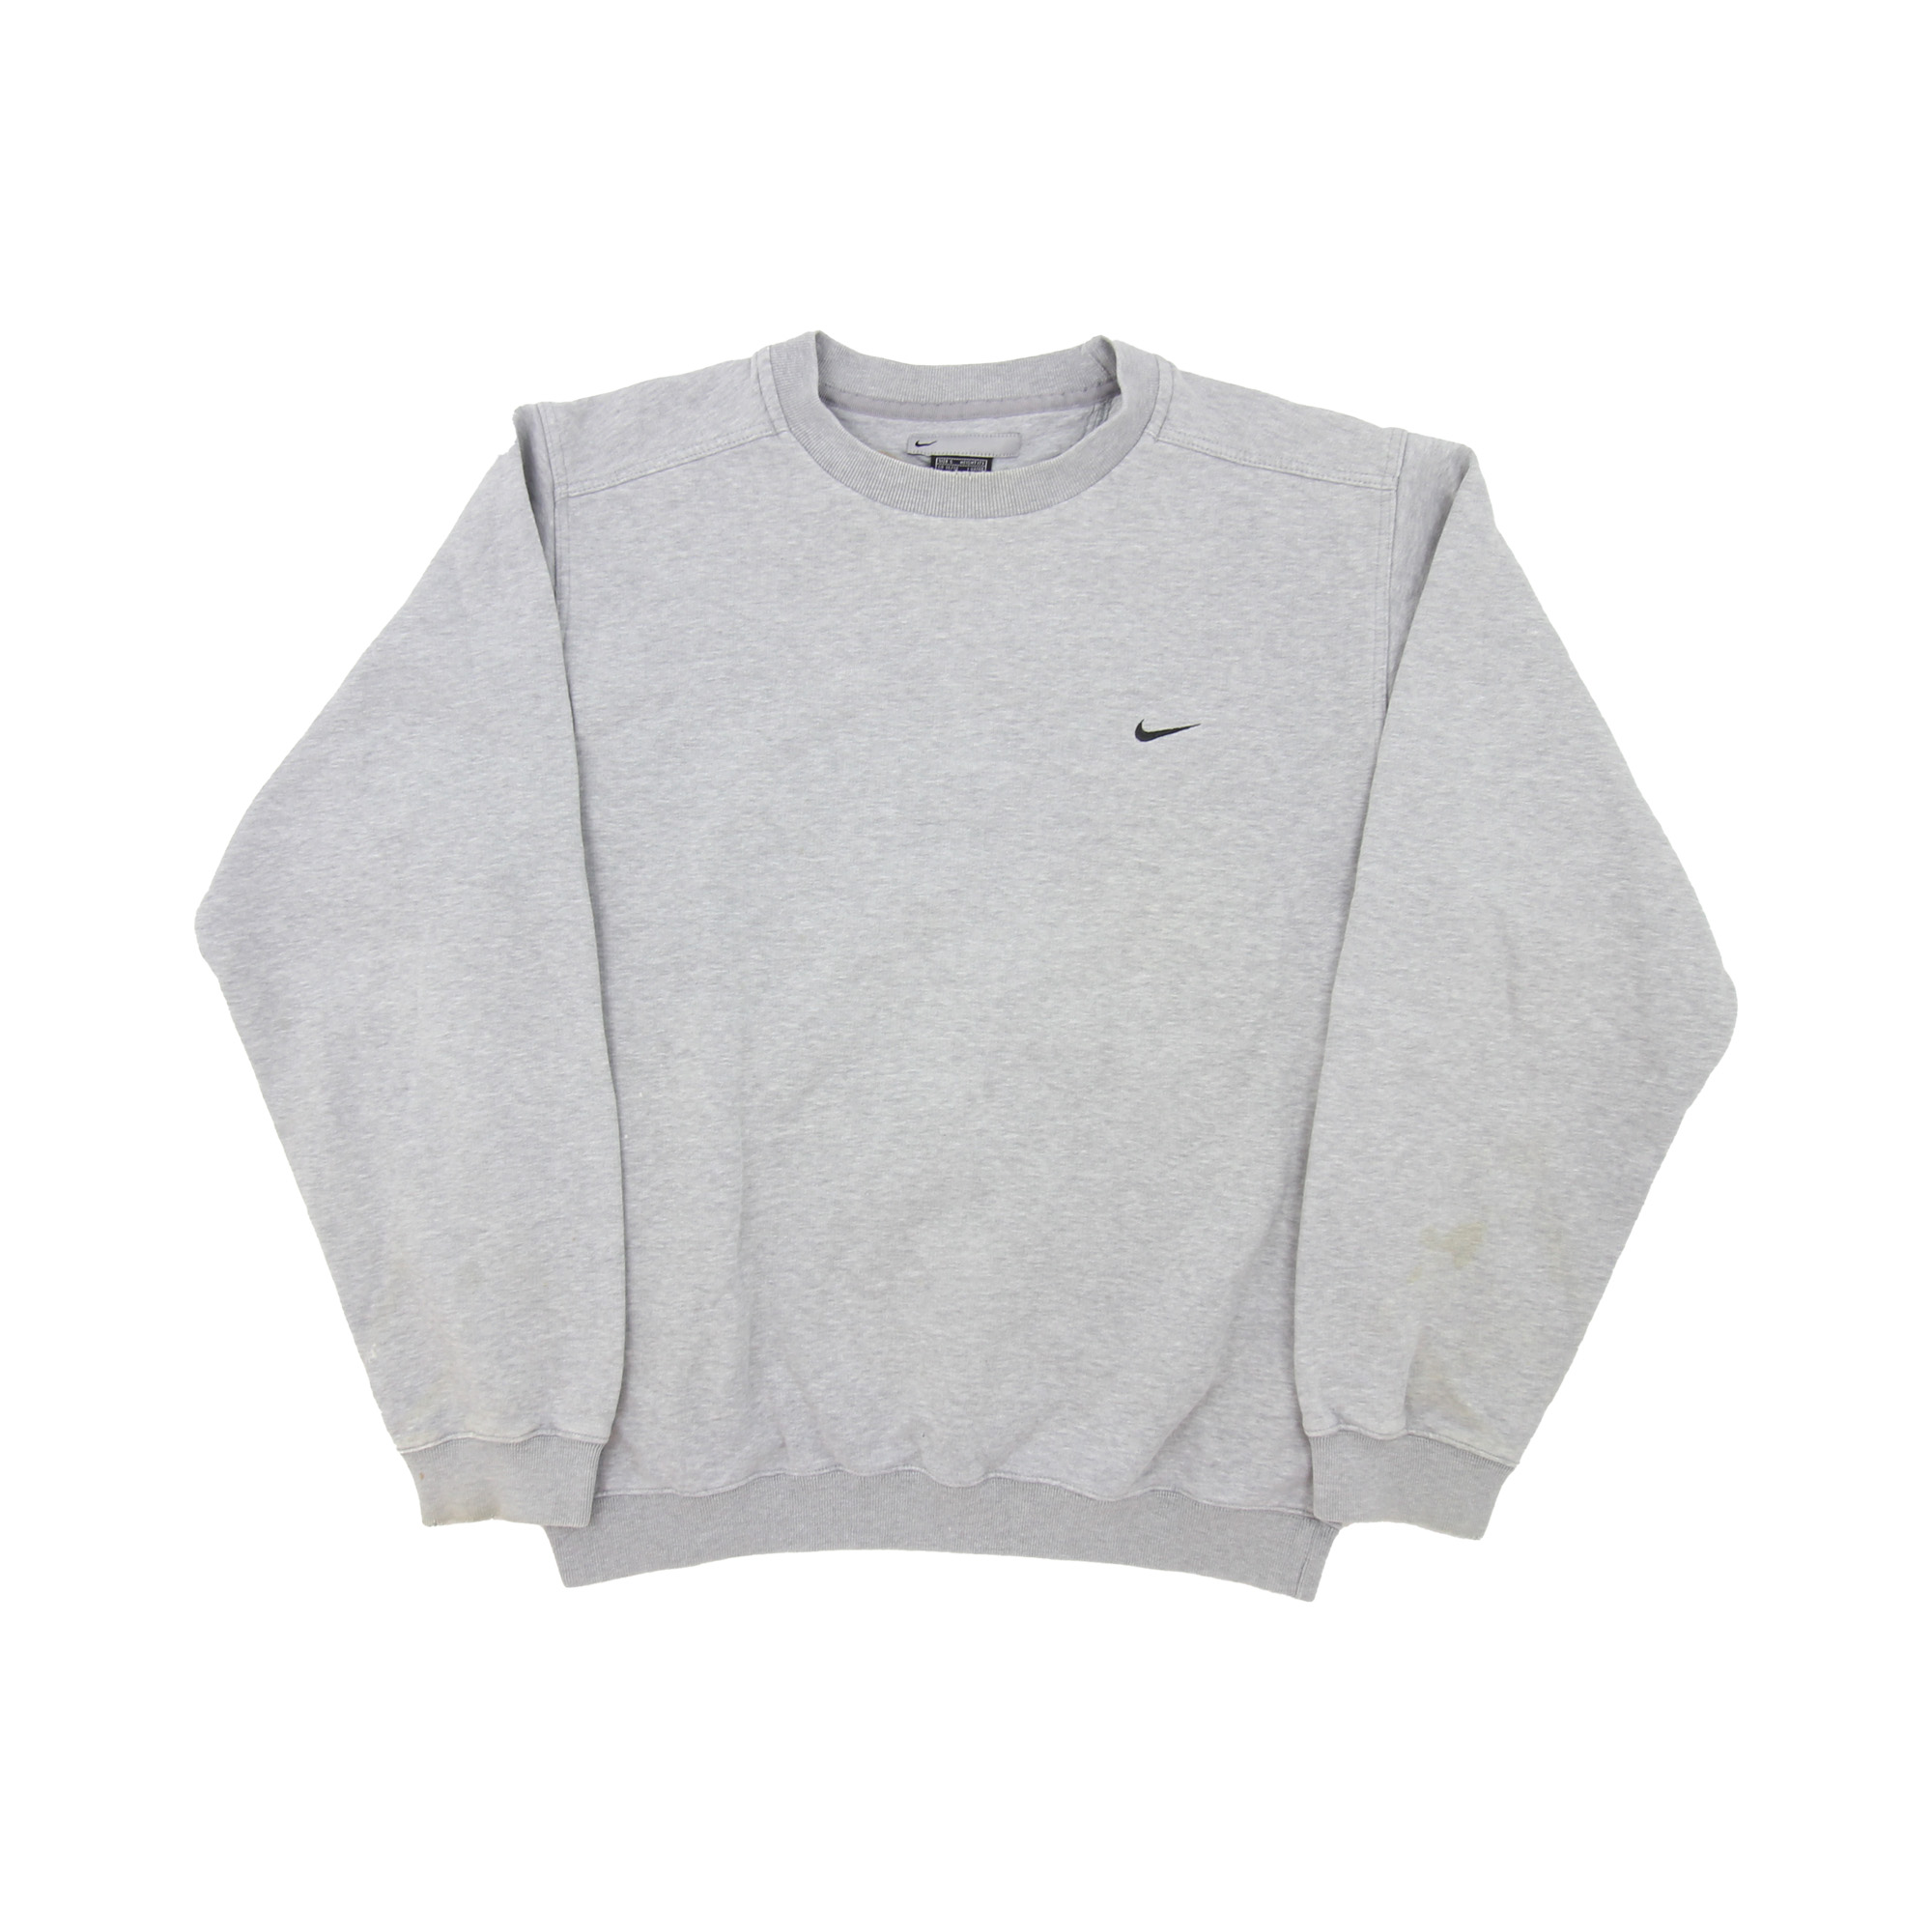 Nike Sweatshirt Grey -  S/M